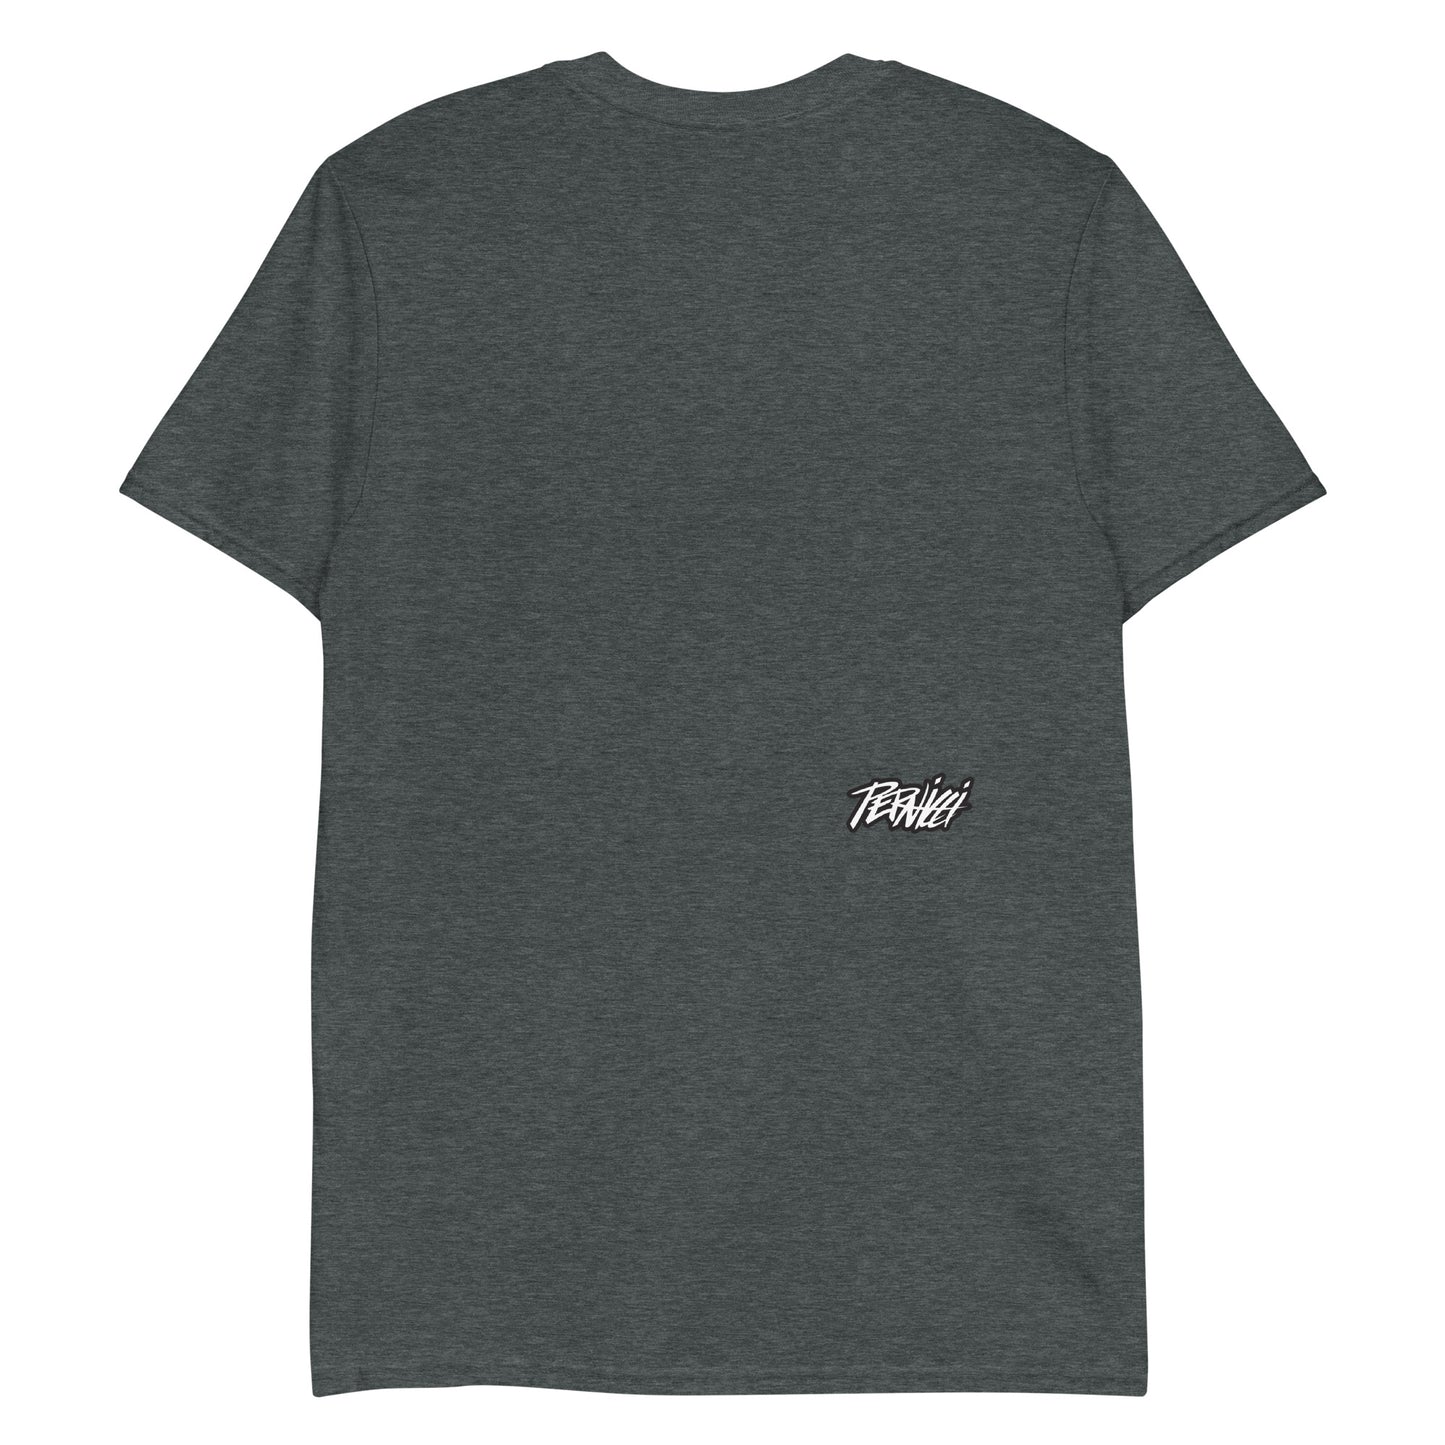 T-Shirt Sig Surf1